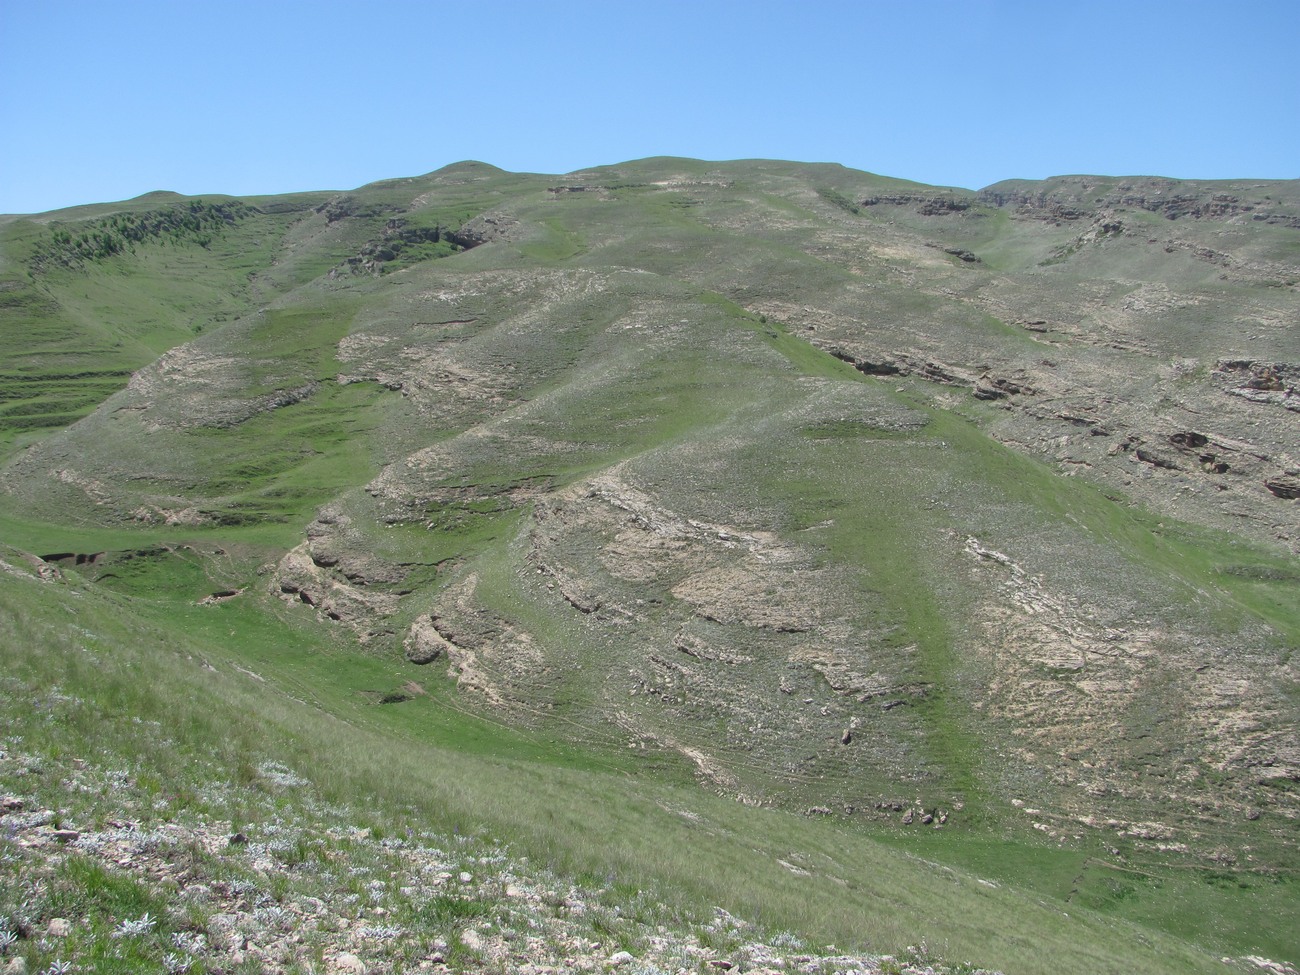 Леваши, image of landscape/habitat.